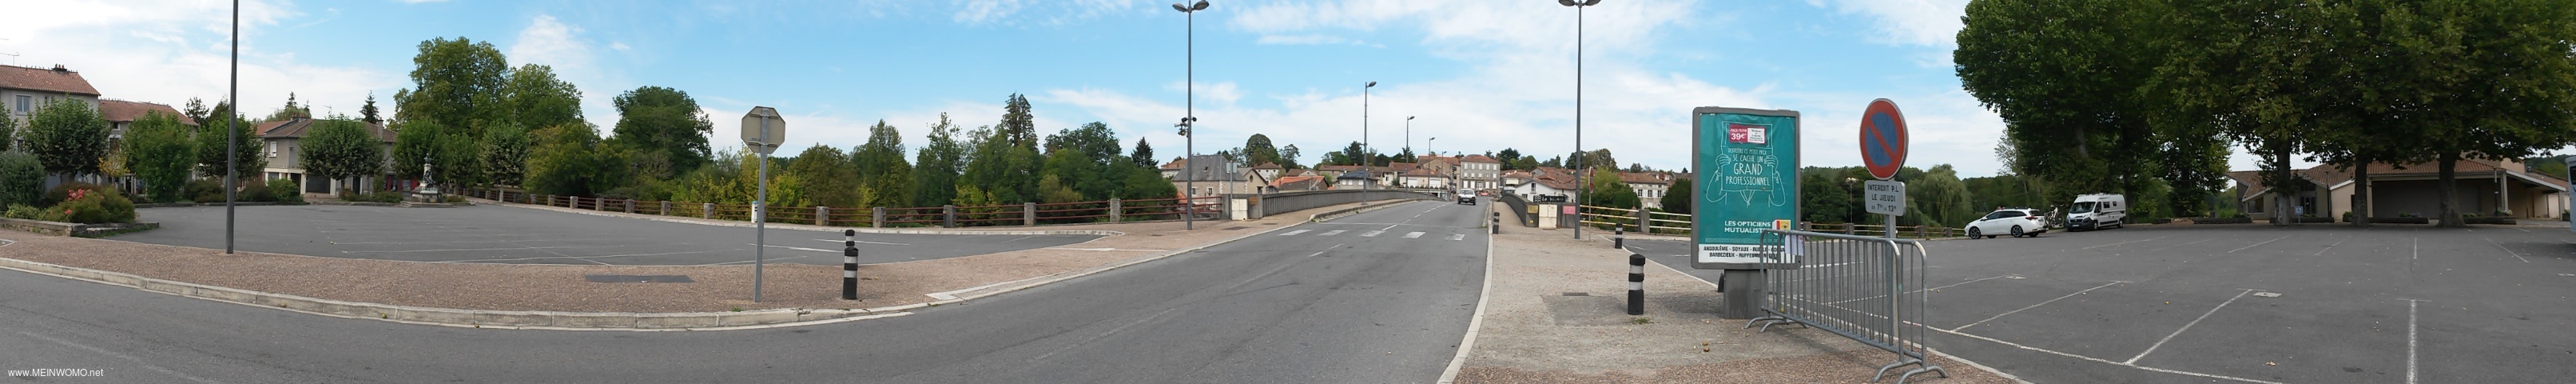 Chabanais Panorama - Parkplatz